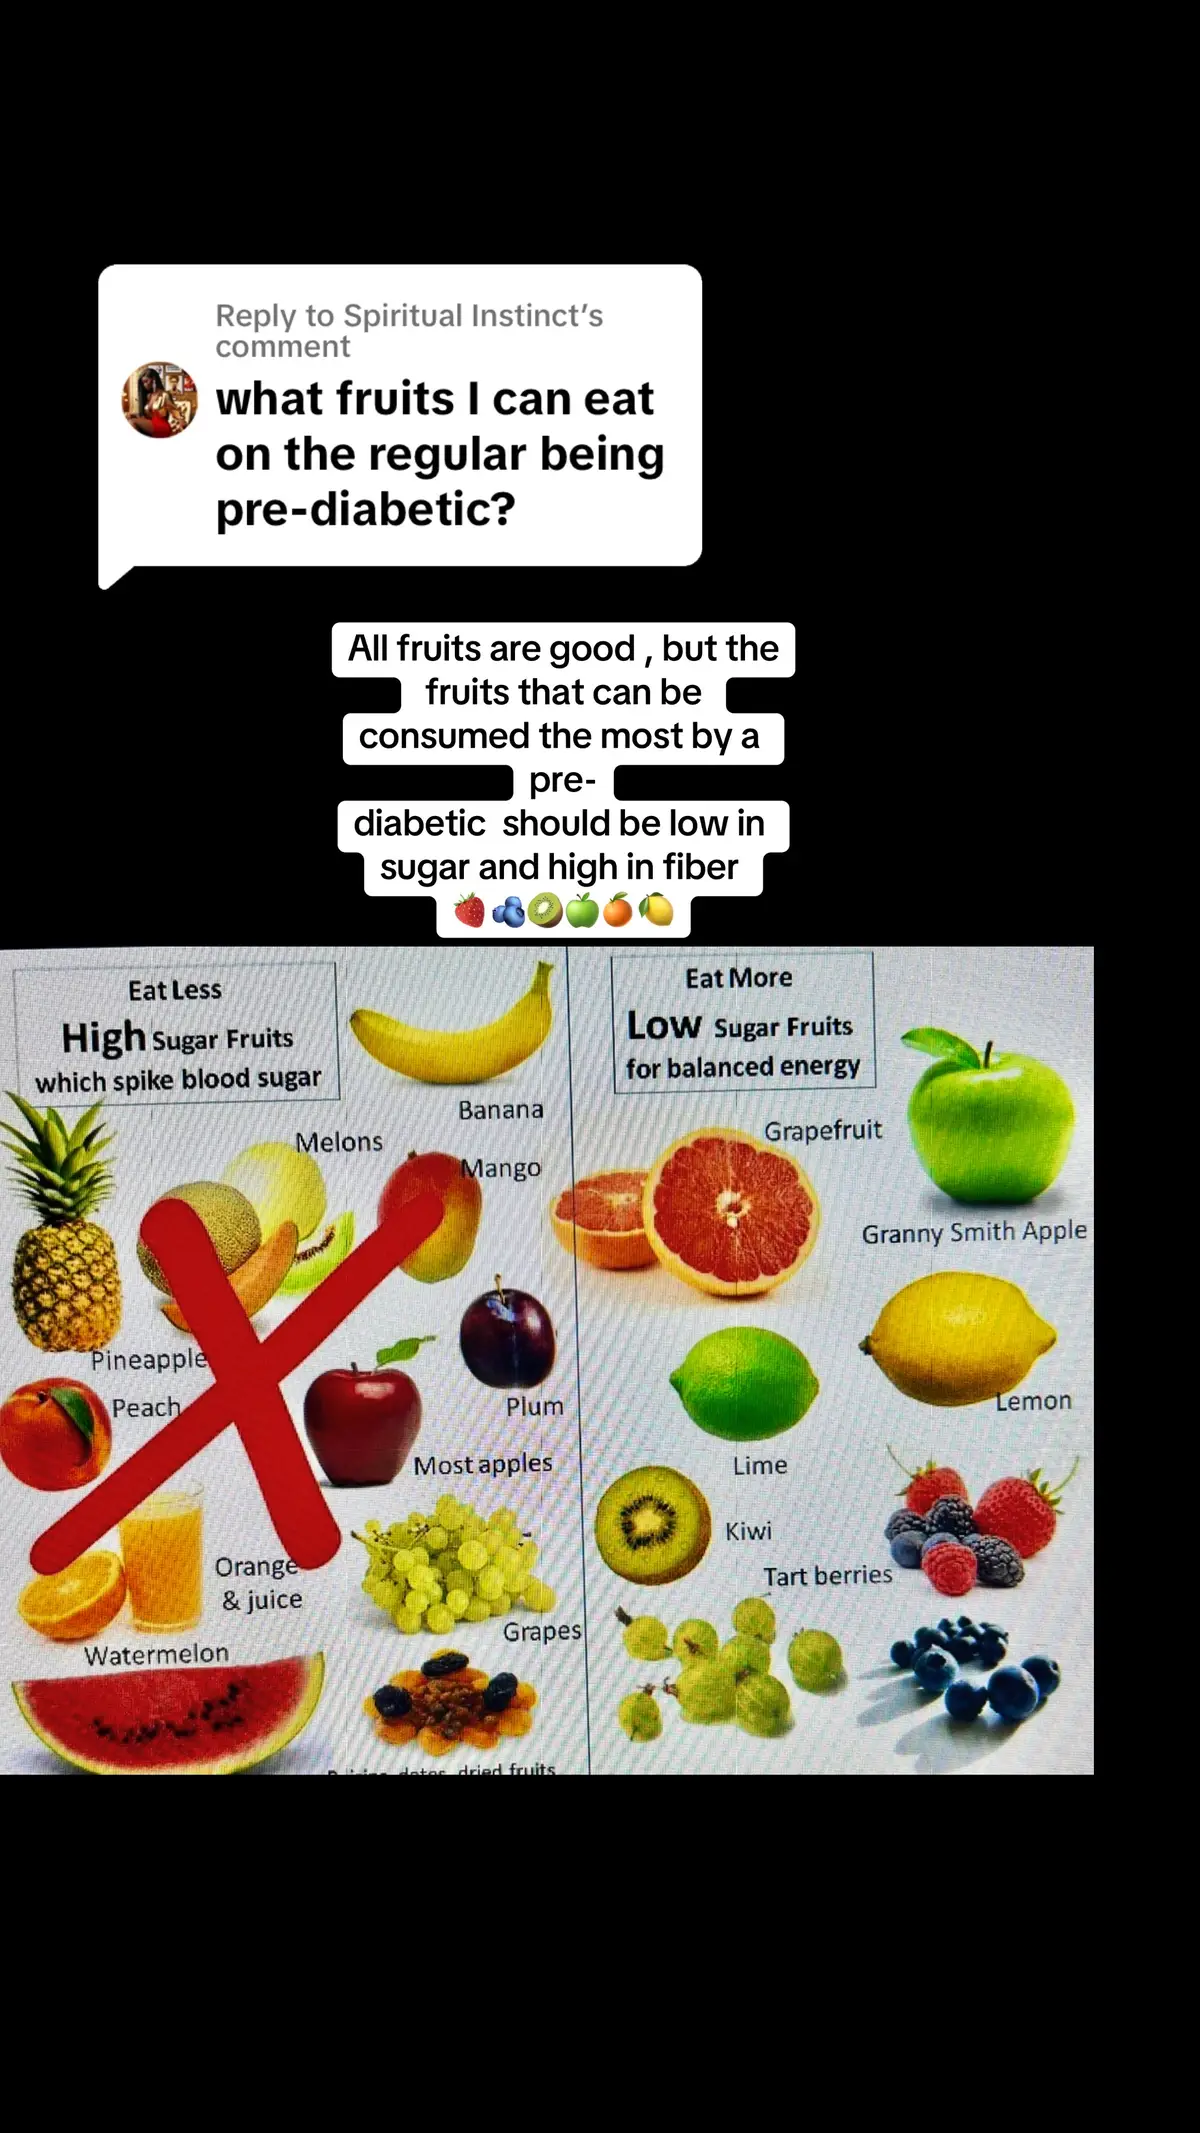 Replying to @Spiritual Instinct #diabetes #prediabetesdiet #lowsugar#highfiber#eatclean#eattoheal#glucose ##lowgylcemic #berries#citrus#